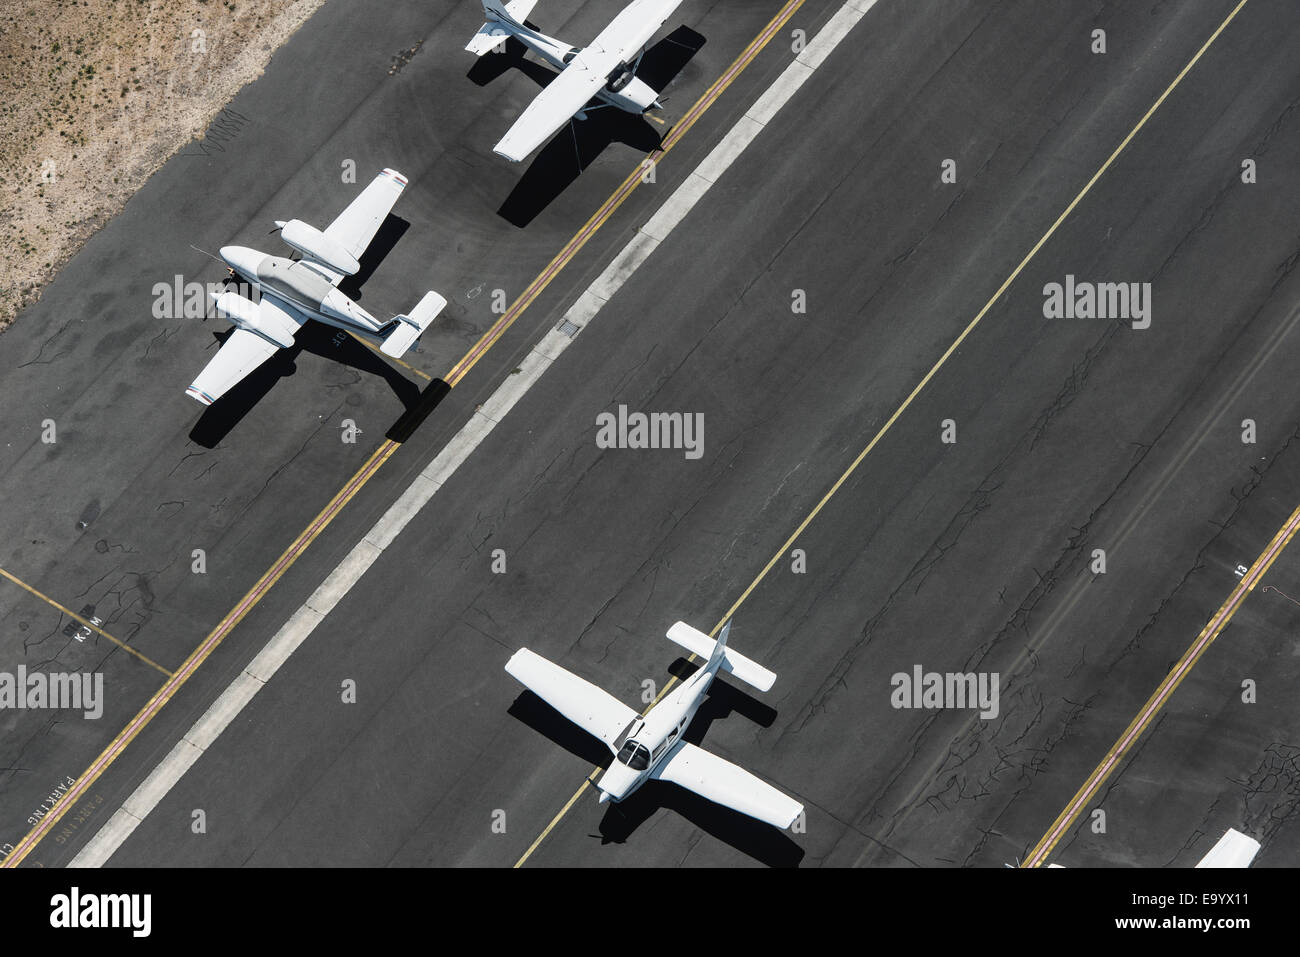 Aerial view of three airplanes on runway, St Kilda, Melbourne, Victoria, Australia Stock Photo